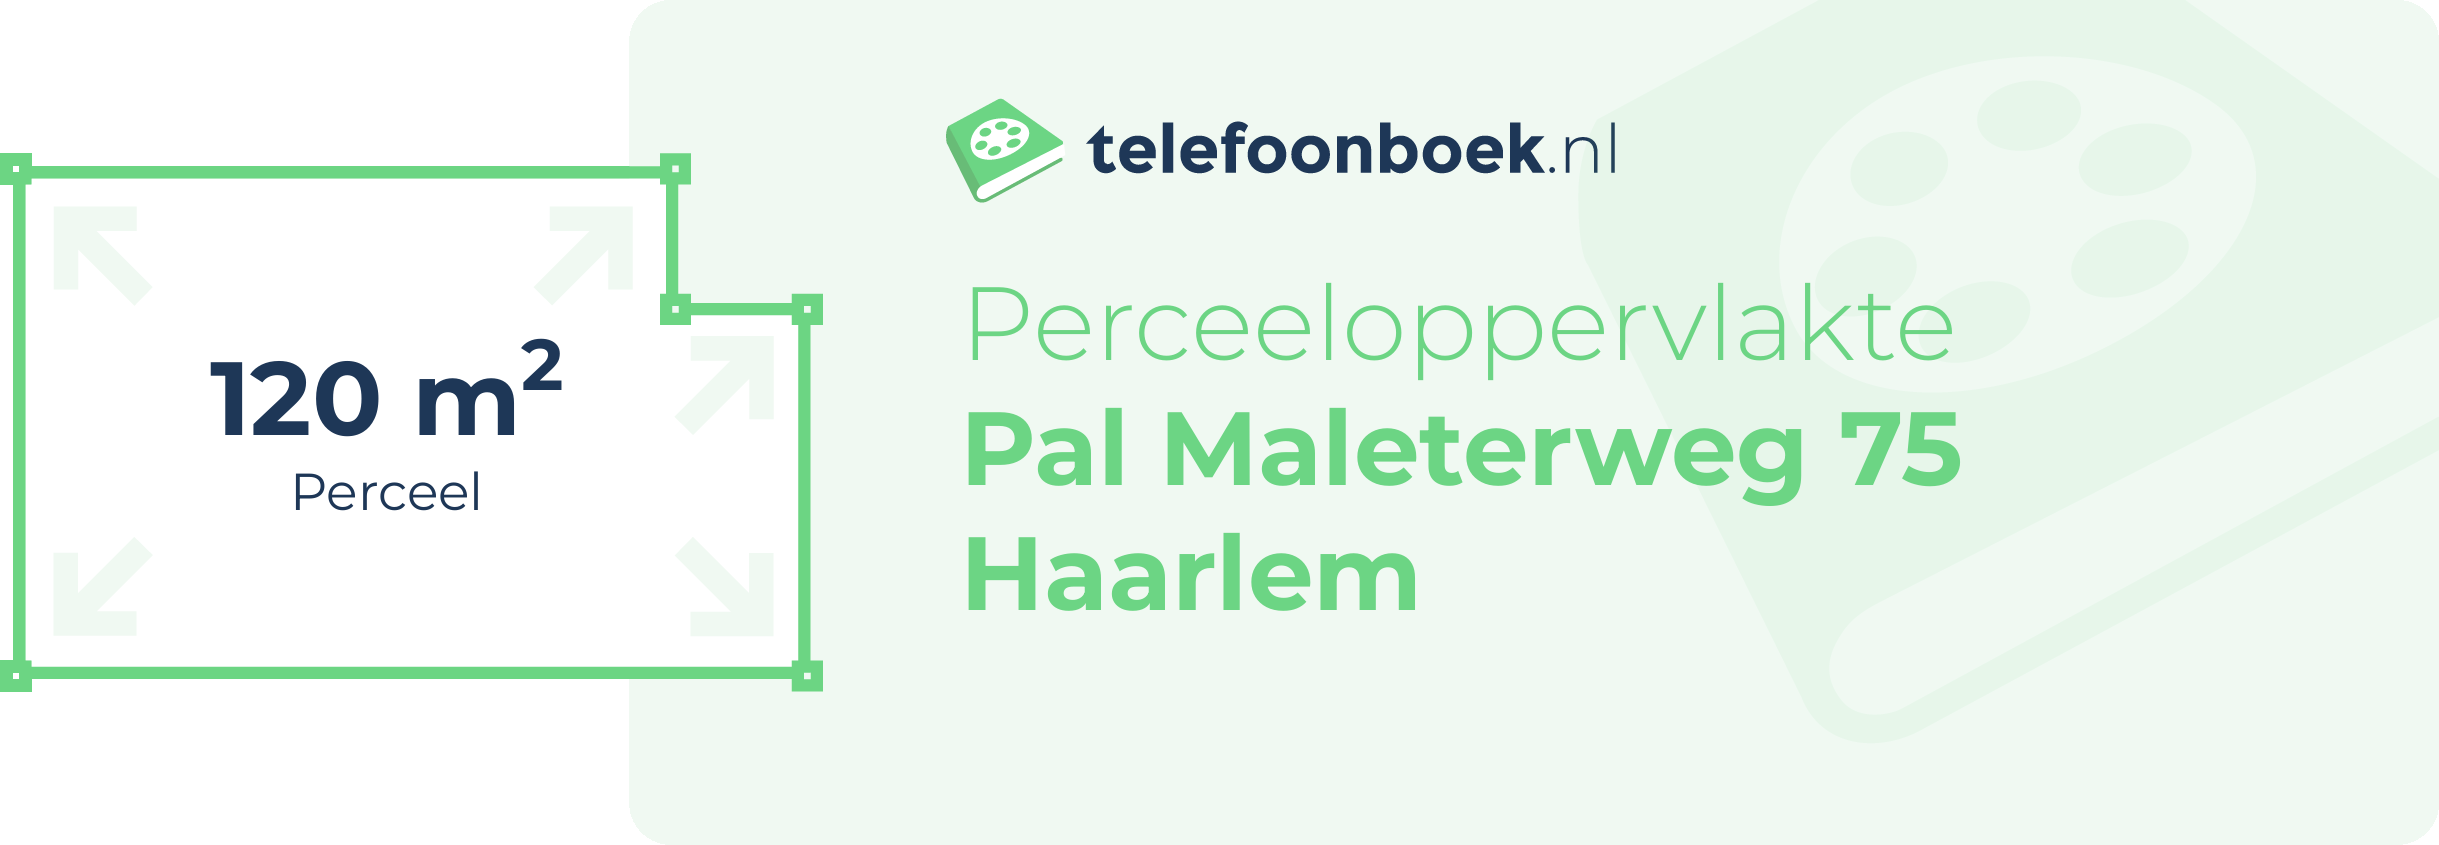 Perceeloppervlakte Pal Maleterweg 75 Haarlem